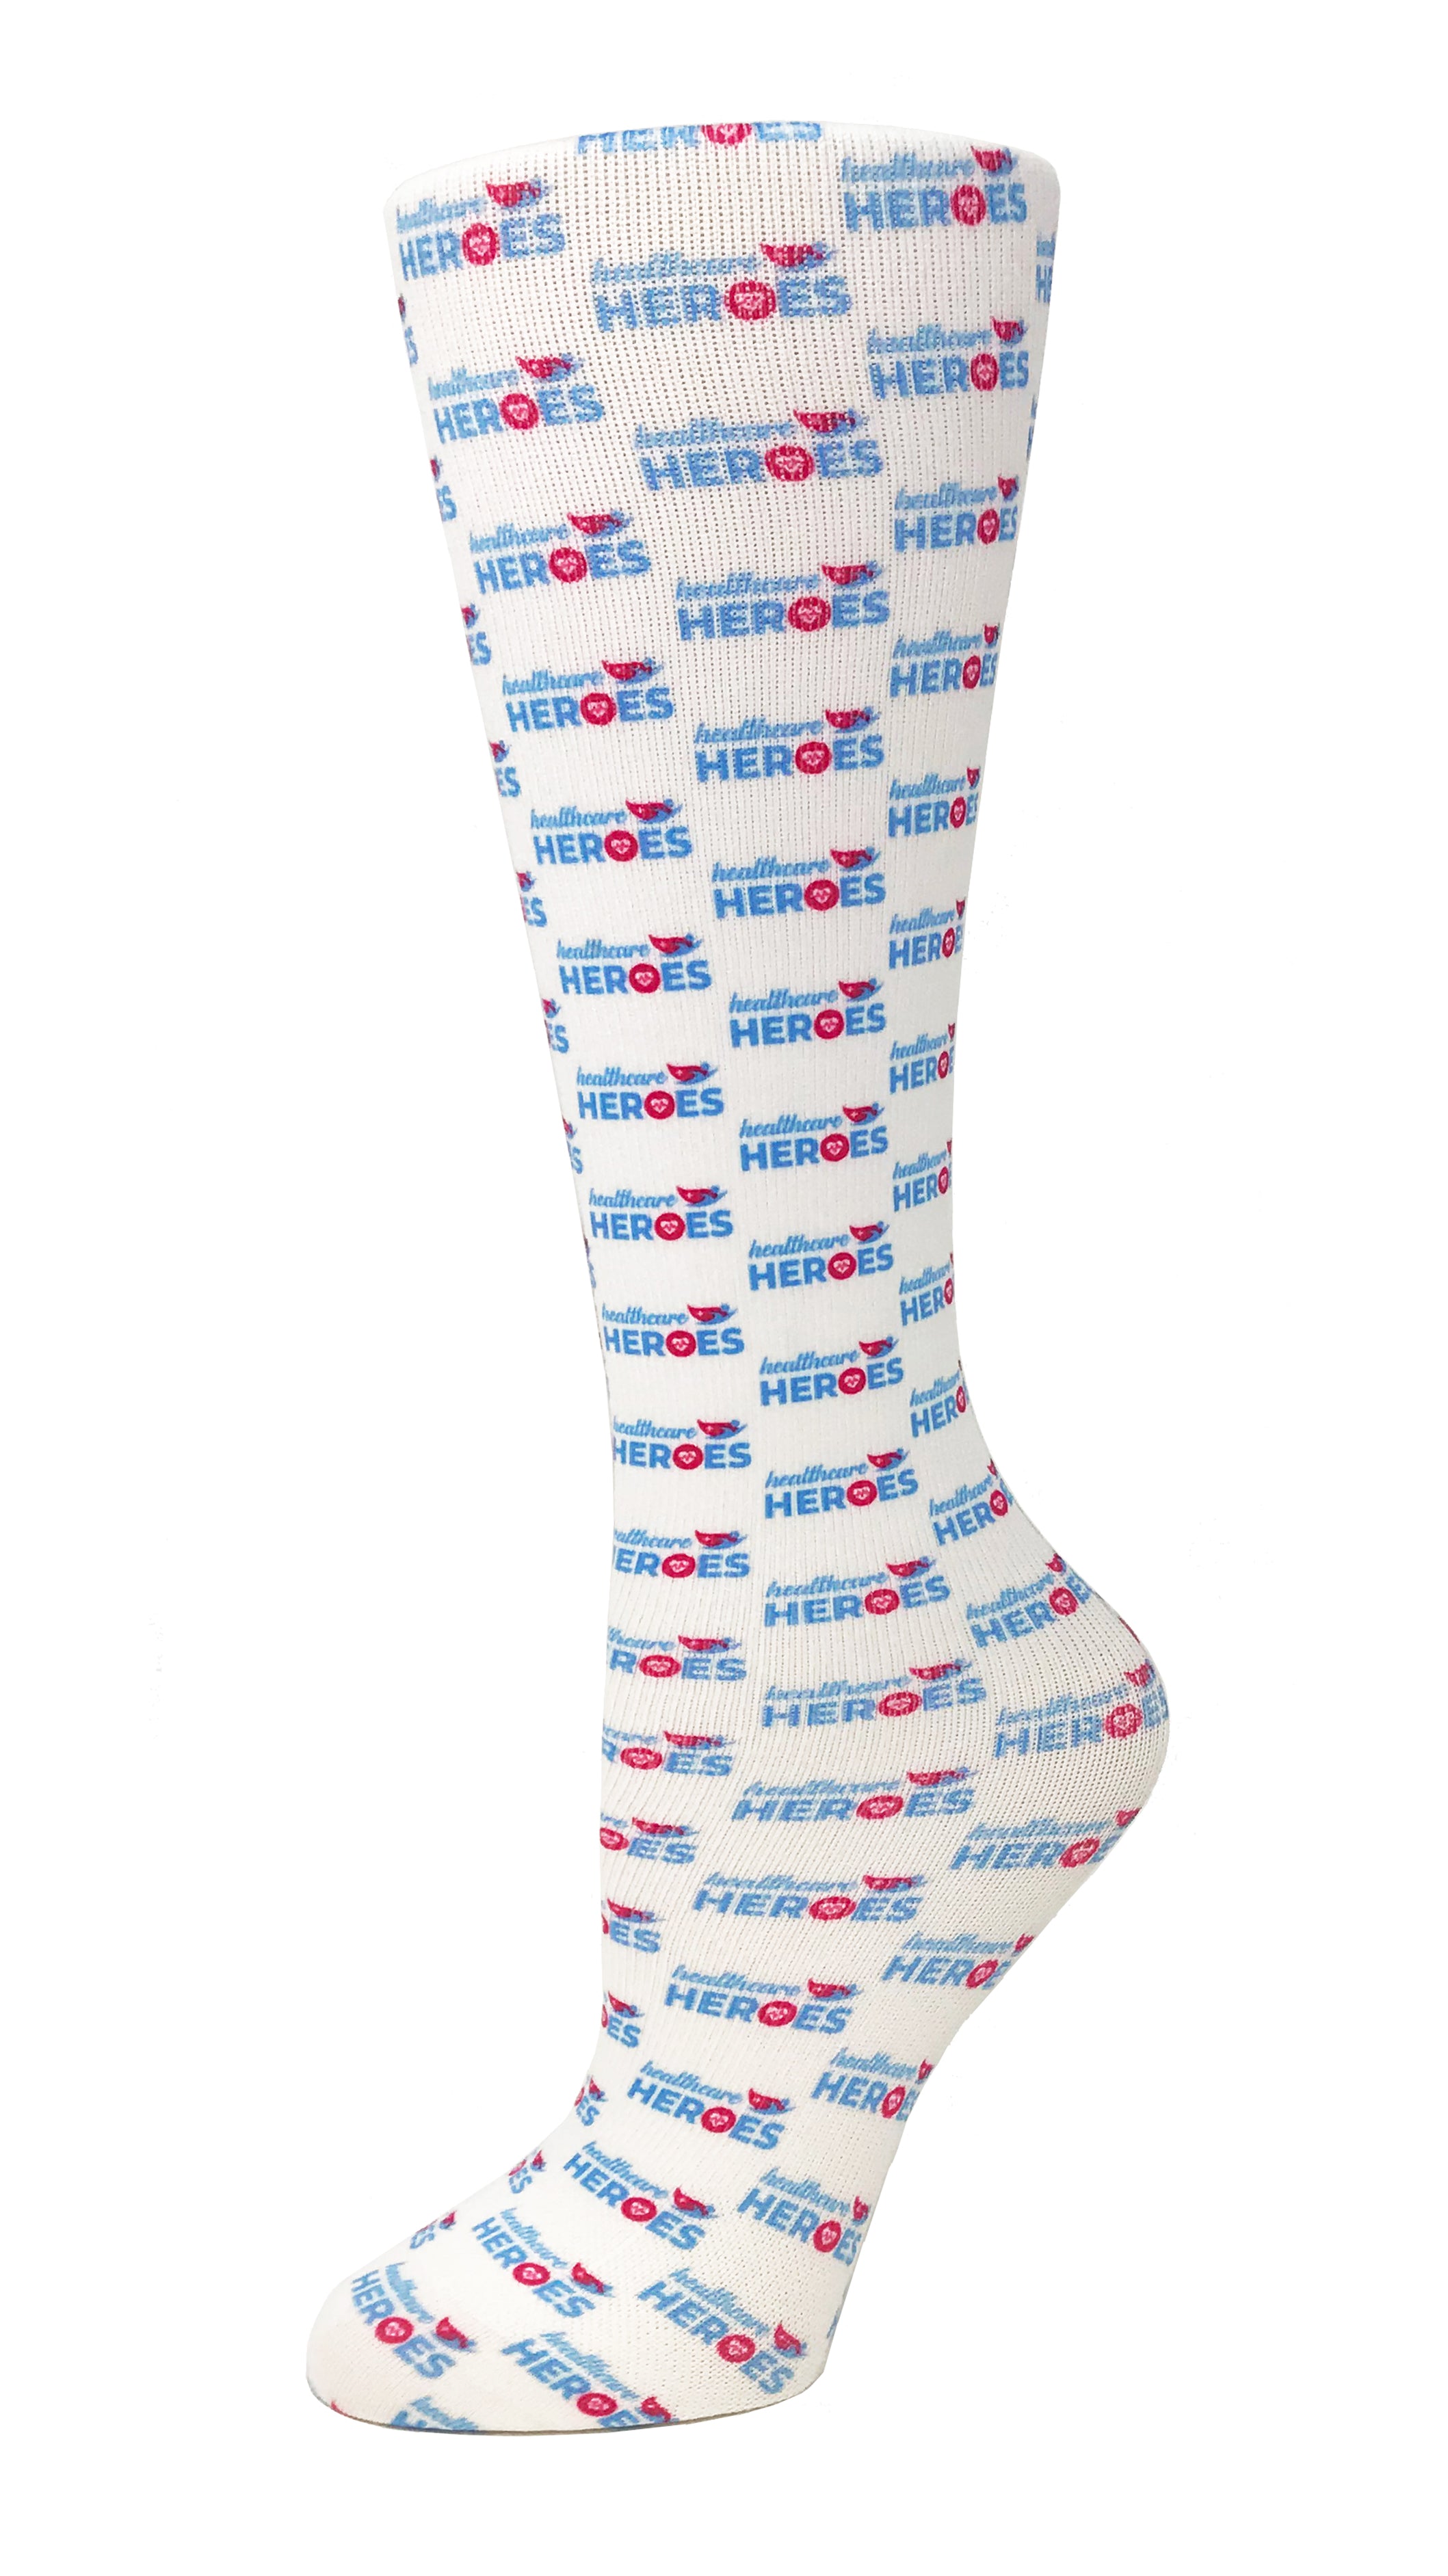 Cutieful Sheer Healthcare Heroes Compression Socks 8-15 mmHG  Beyond Medwear Apparel